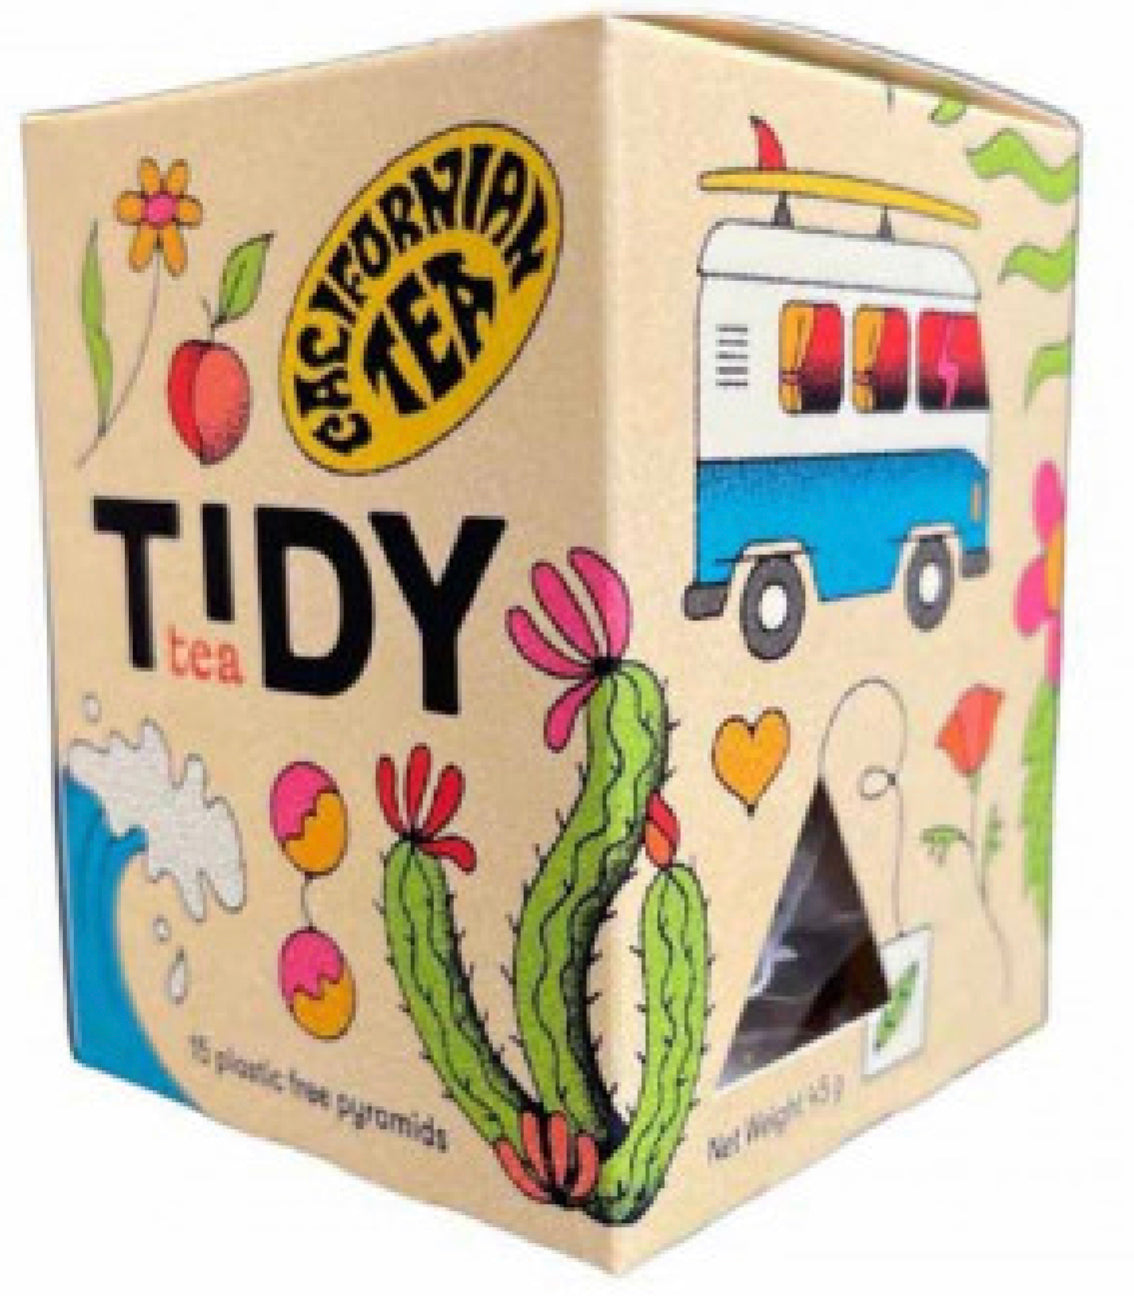 Tidy Tea - Black tea & Peach -  15 sachets - plastic free pyramids - 45g